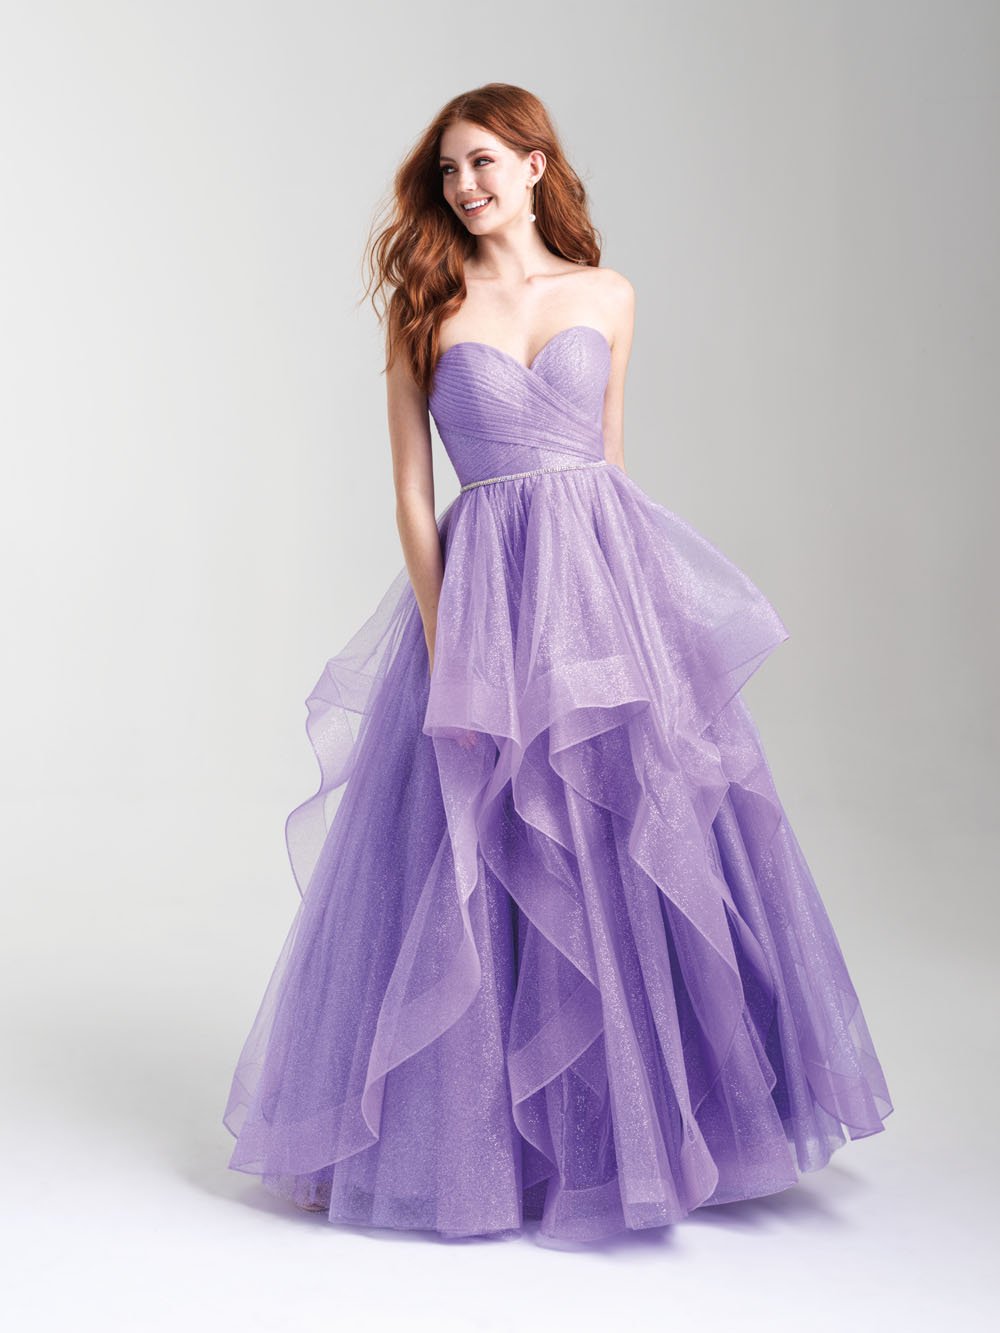 pink and purple dress